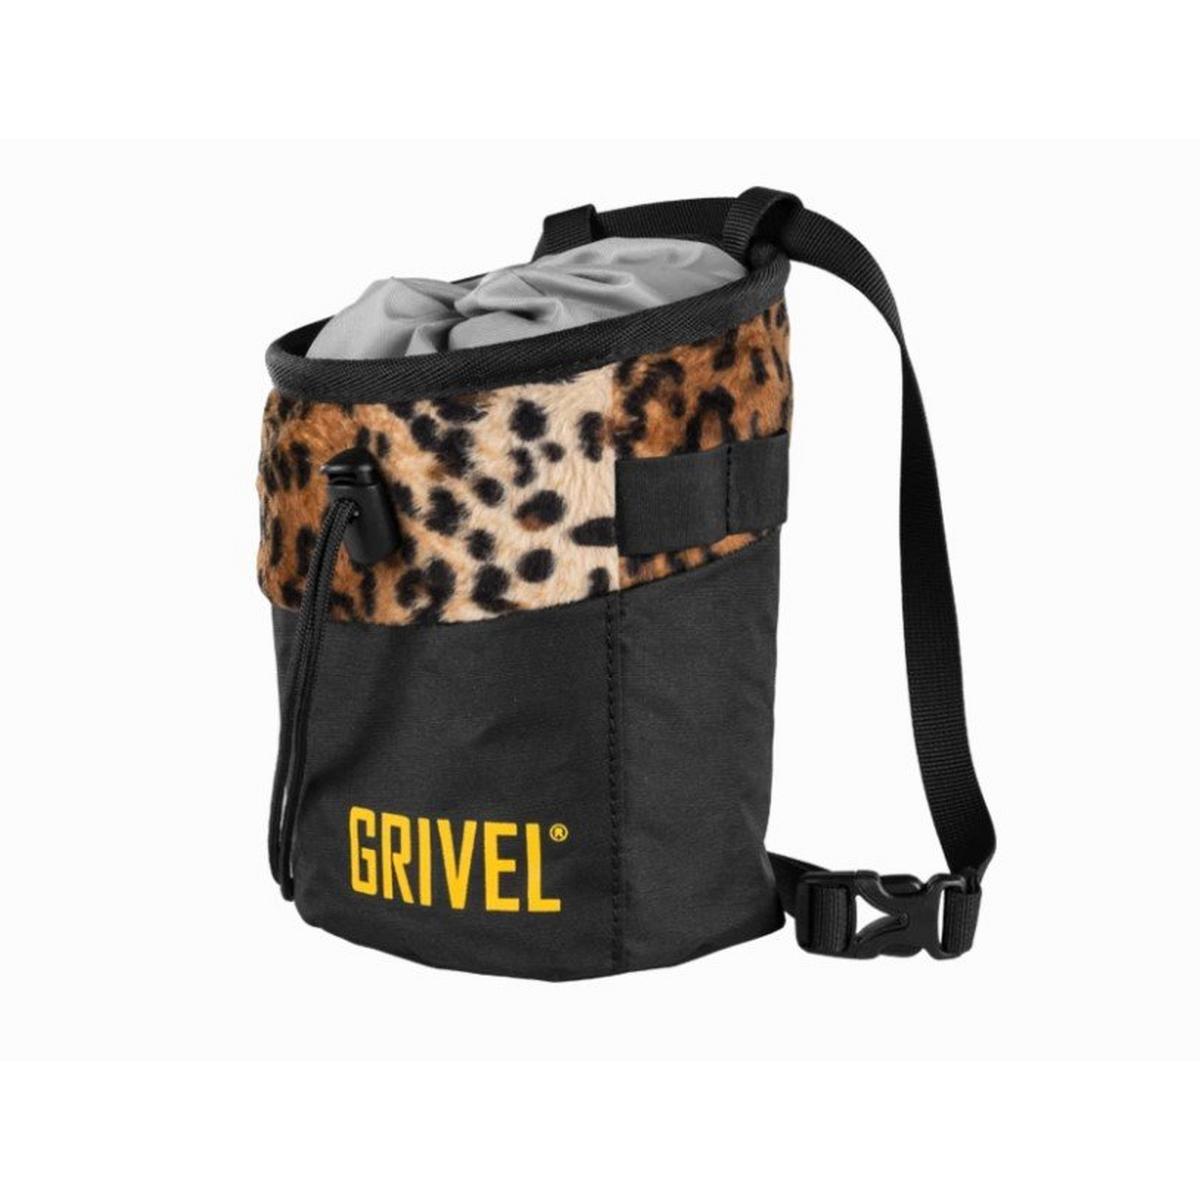 Grivel Trend Chalk Bag - Leopard